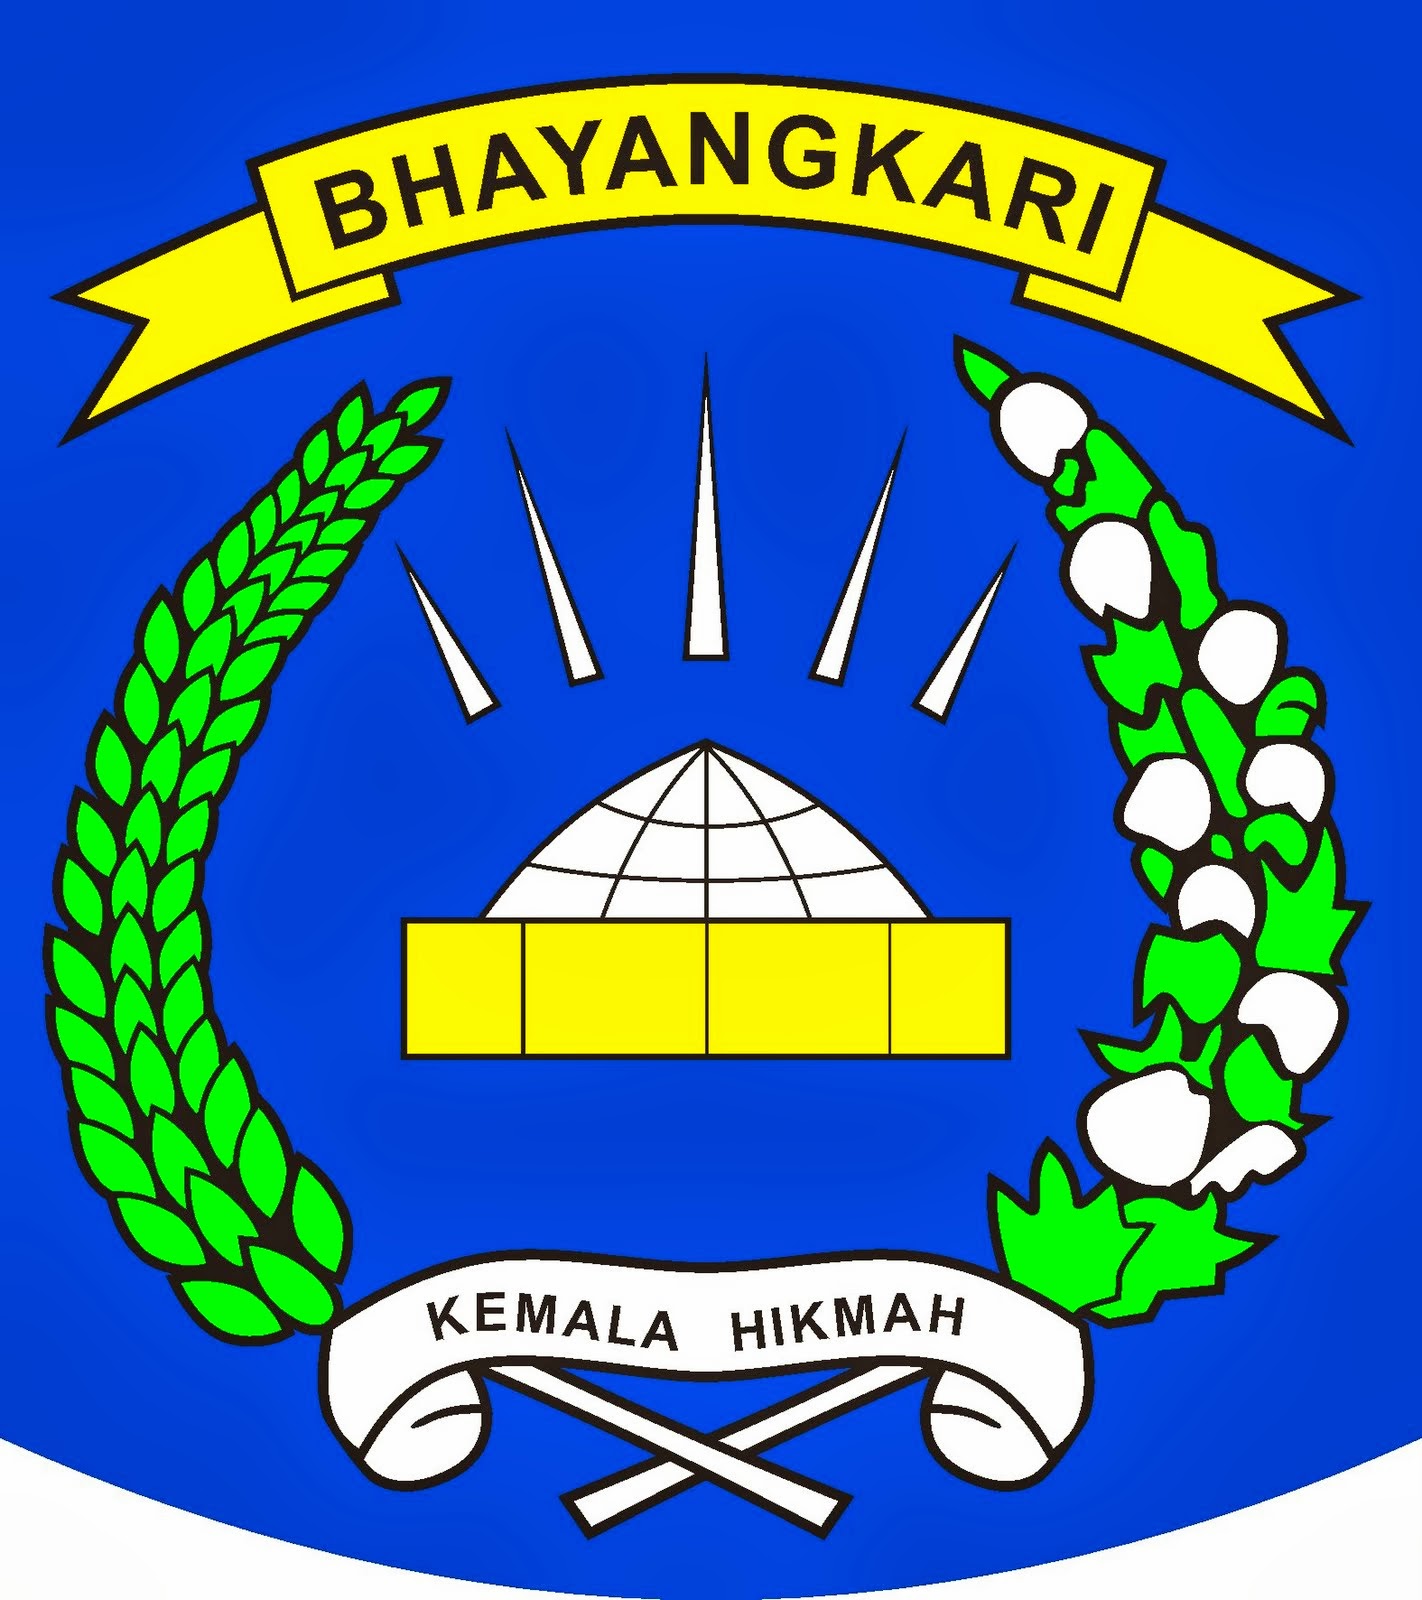 LOGO BHAYANGKARI  Gambar Logo